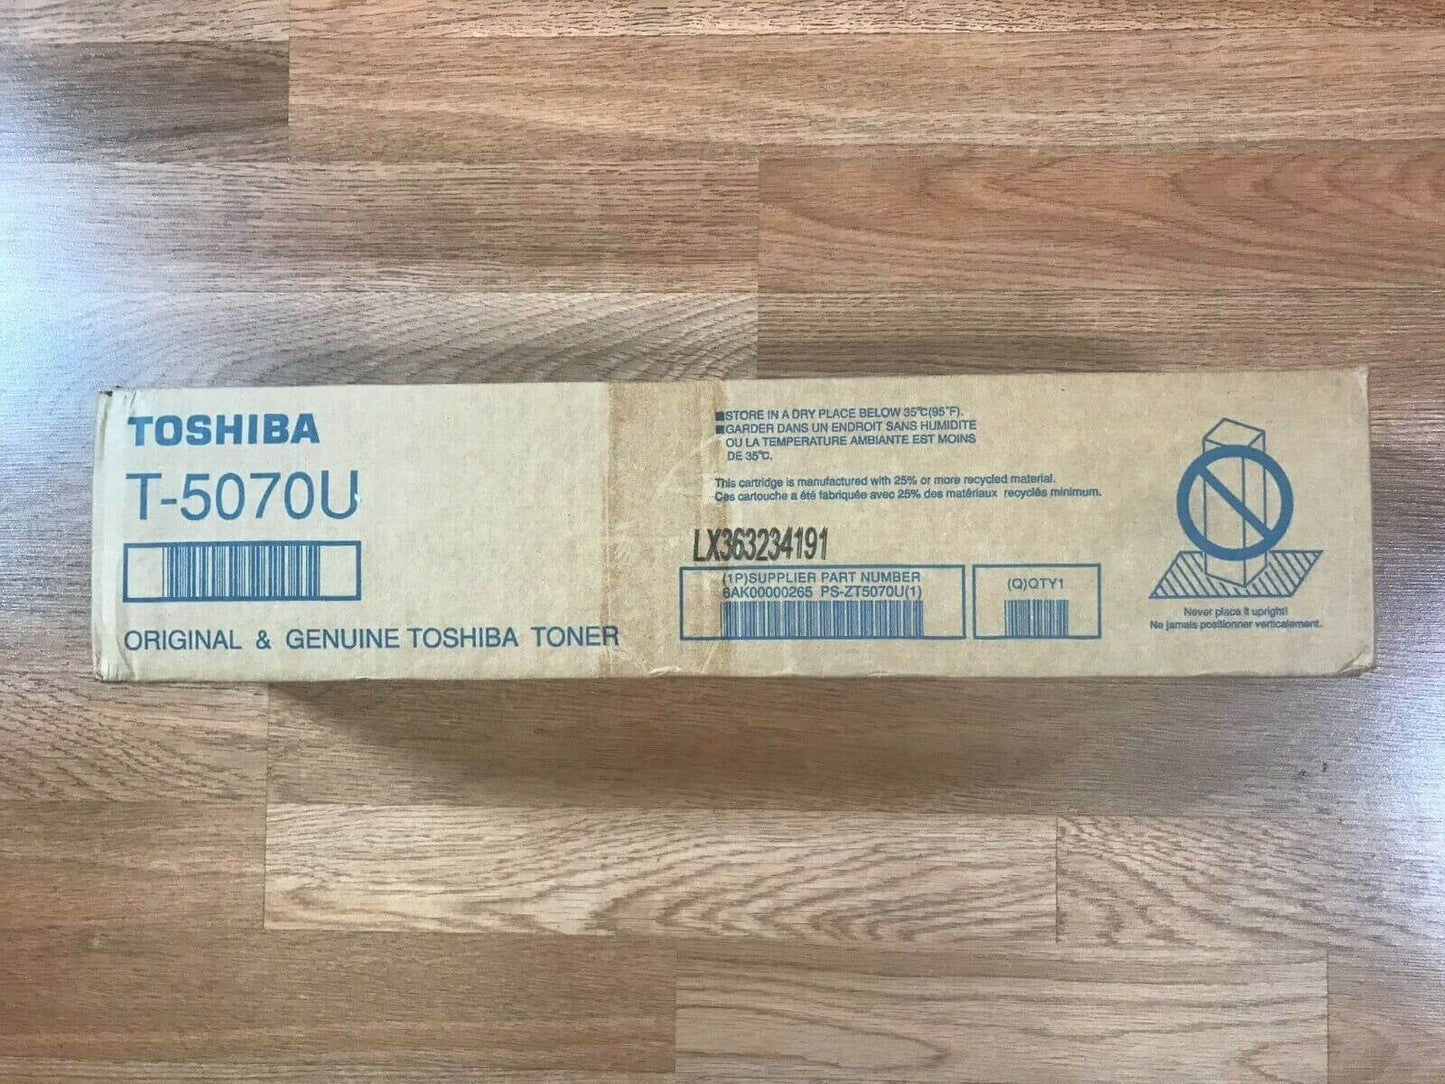 Toshiba T-5070U Toner For e-STUDIO 207L/257/307/357/457/507 Same Day Shipping!! - copier-clearance-center